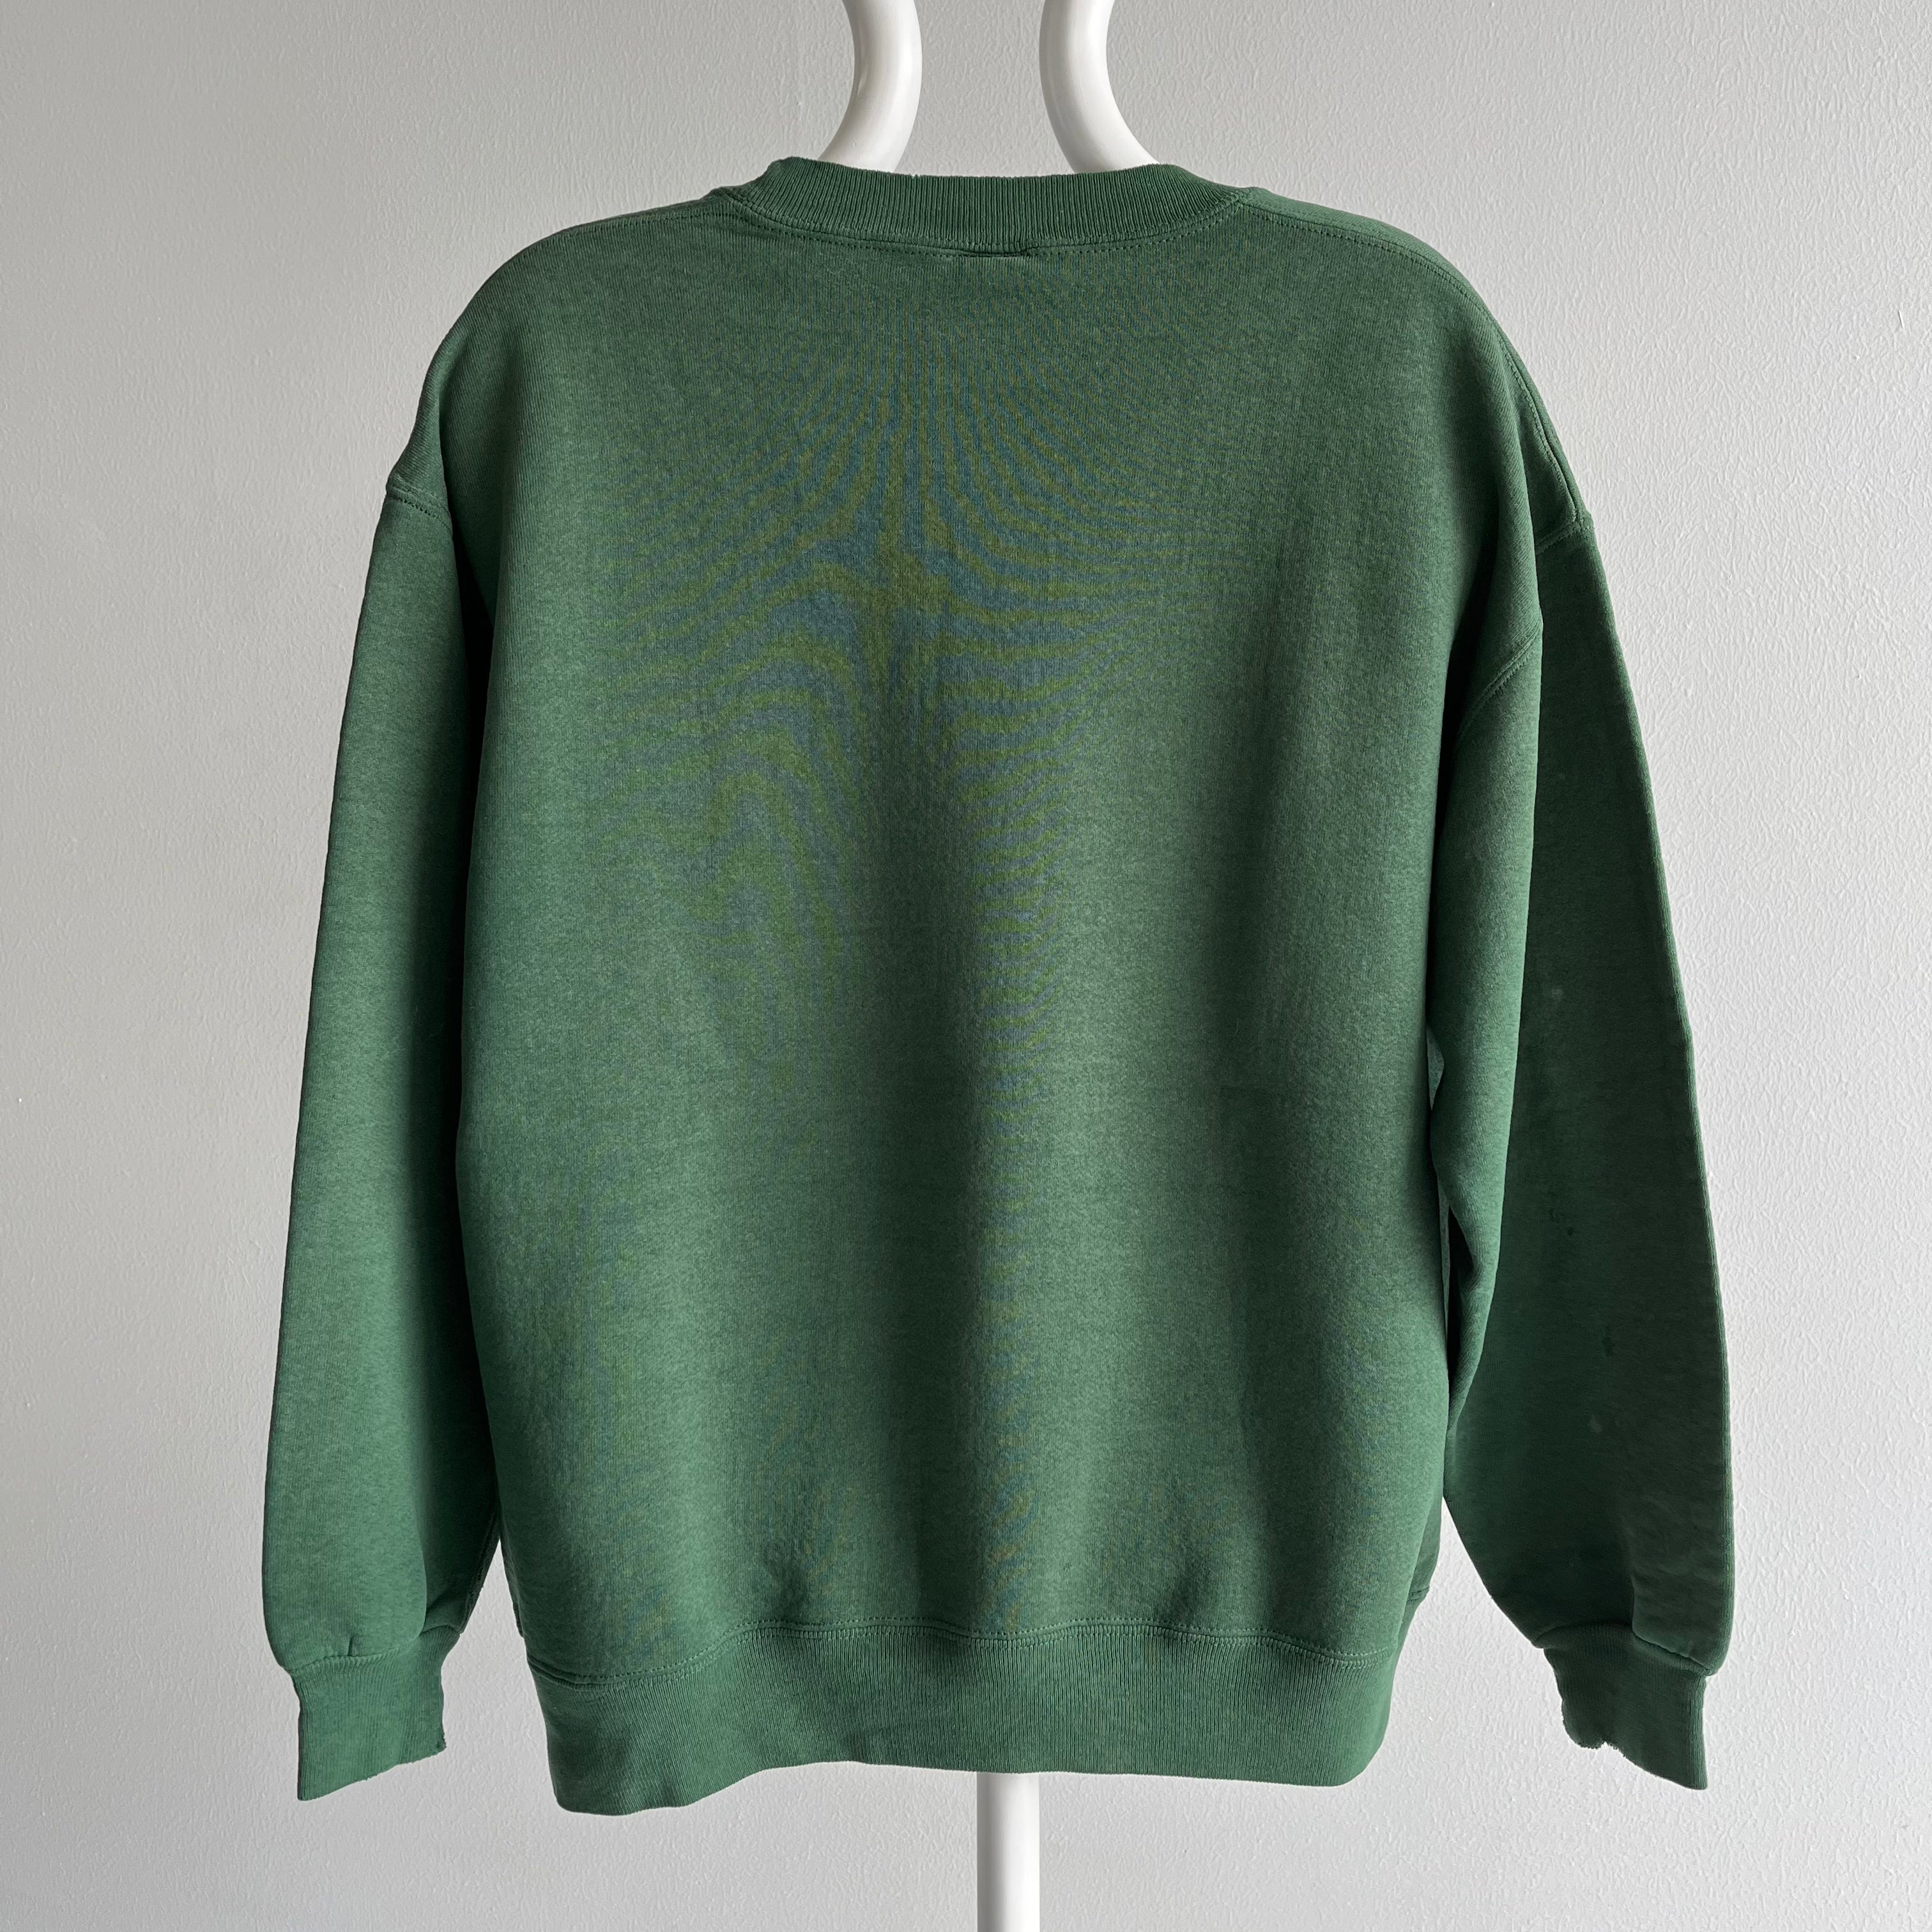 1980/90s Green Bay Packers Single V Sweatshirt